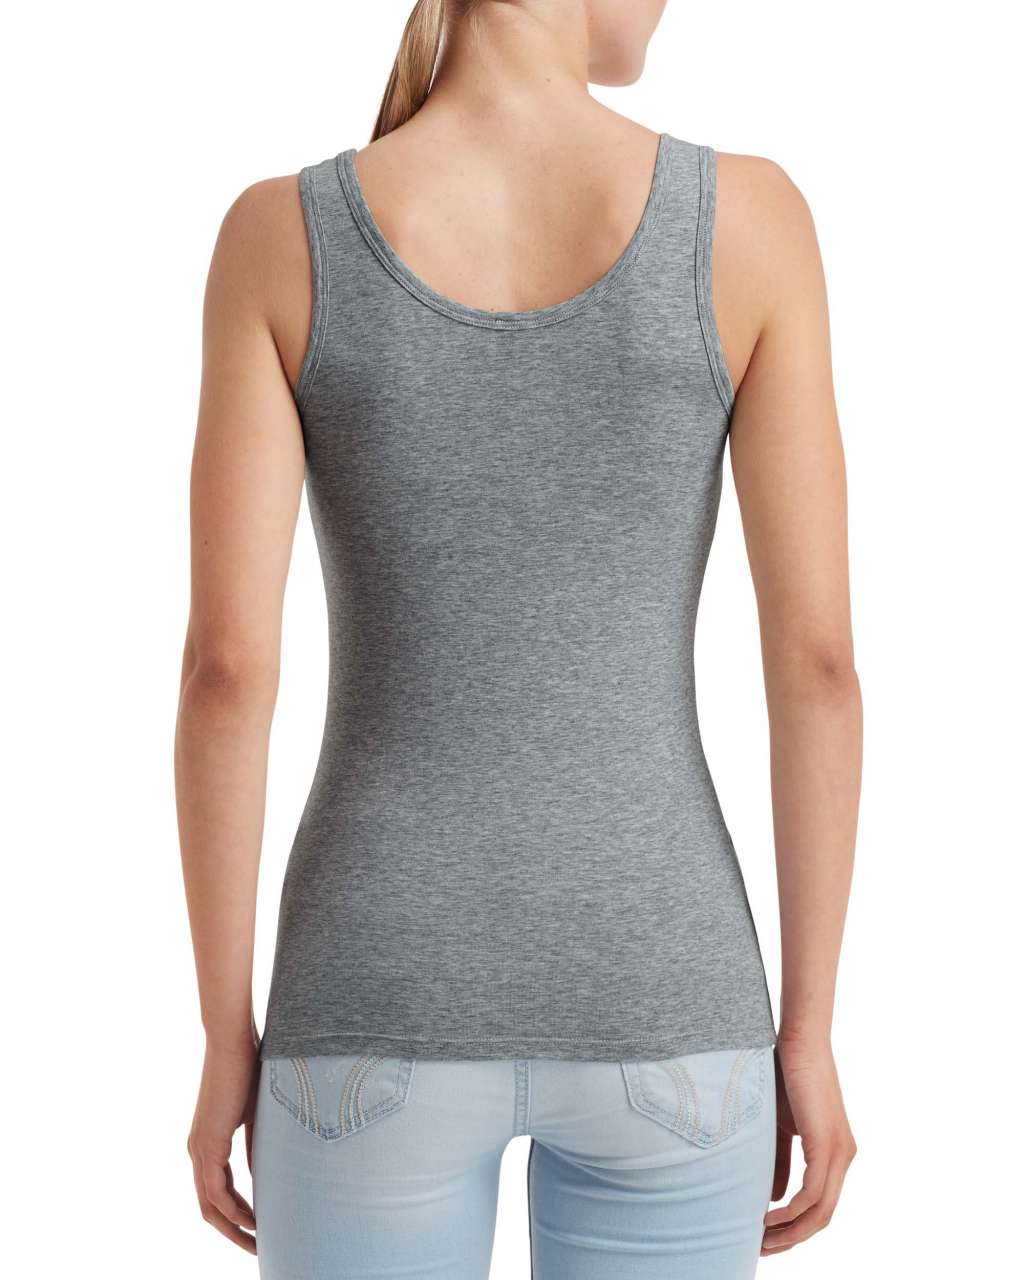 Anvil Damen Tank Top Longshirt Slim Fit Stretch T-Shirt Unterhemd Gym